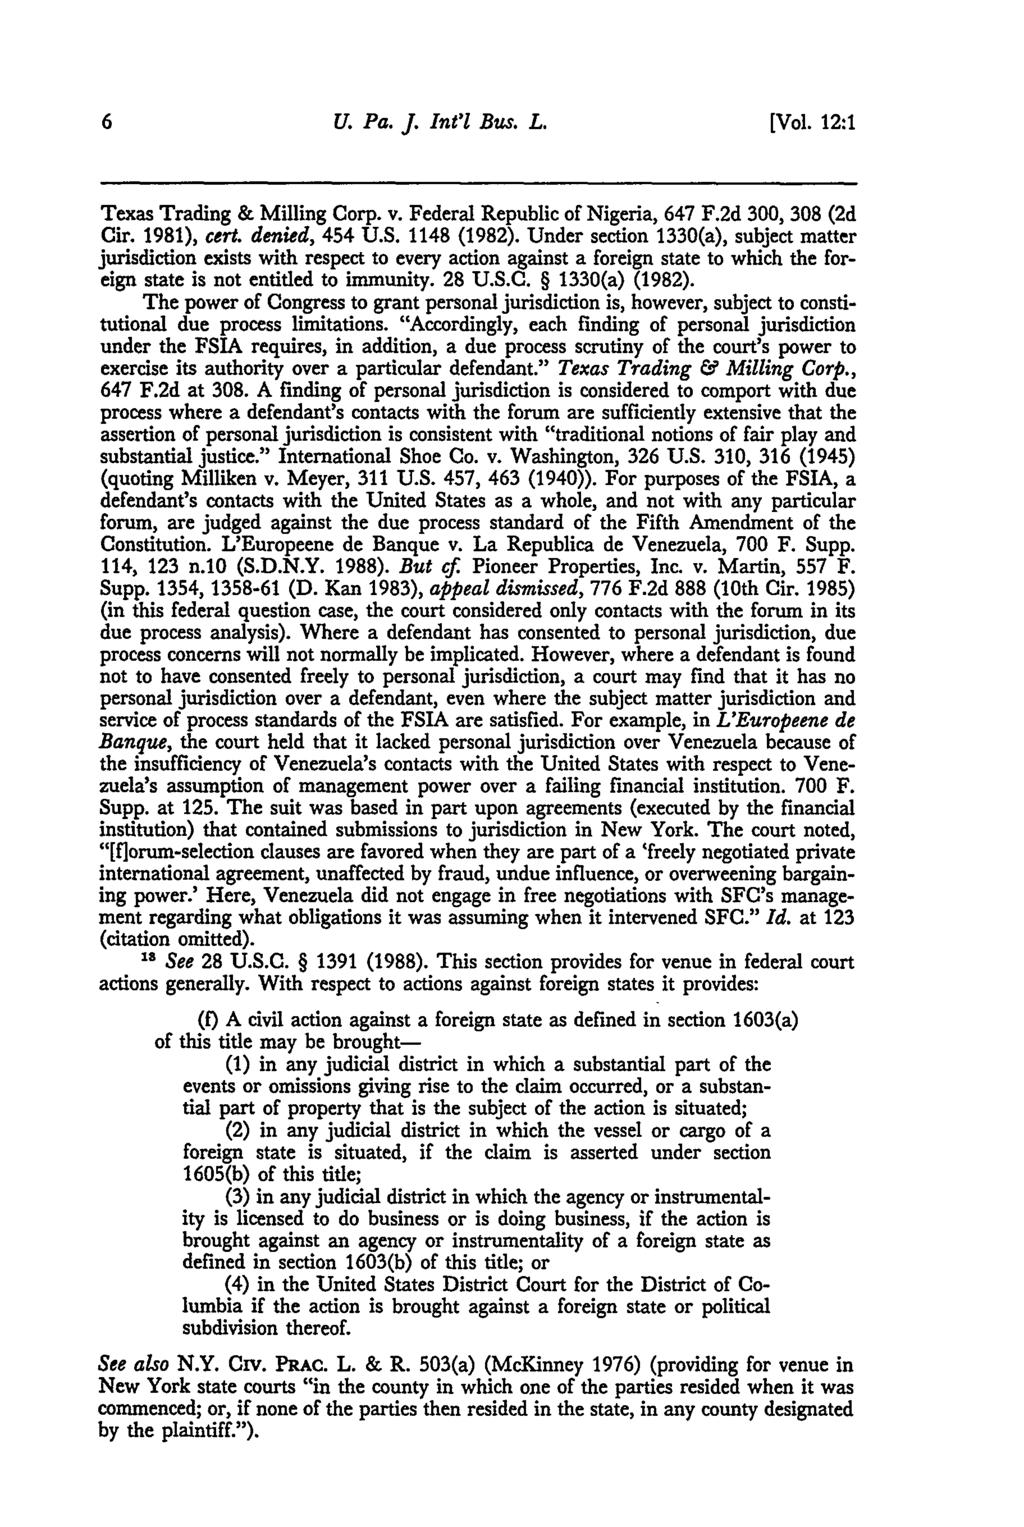 U. Pa. J. Int'l Bus. L. [Vol. 12:1 Texas Trading & Milling Corp. v. Federal Republic of Nigeria, 647 F.2d 300, 308 (2d Cir. 1981), cert. denied, 454 U.S. 1148 (1982).